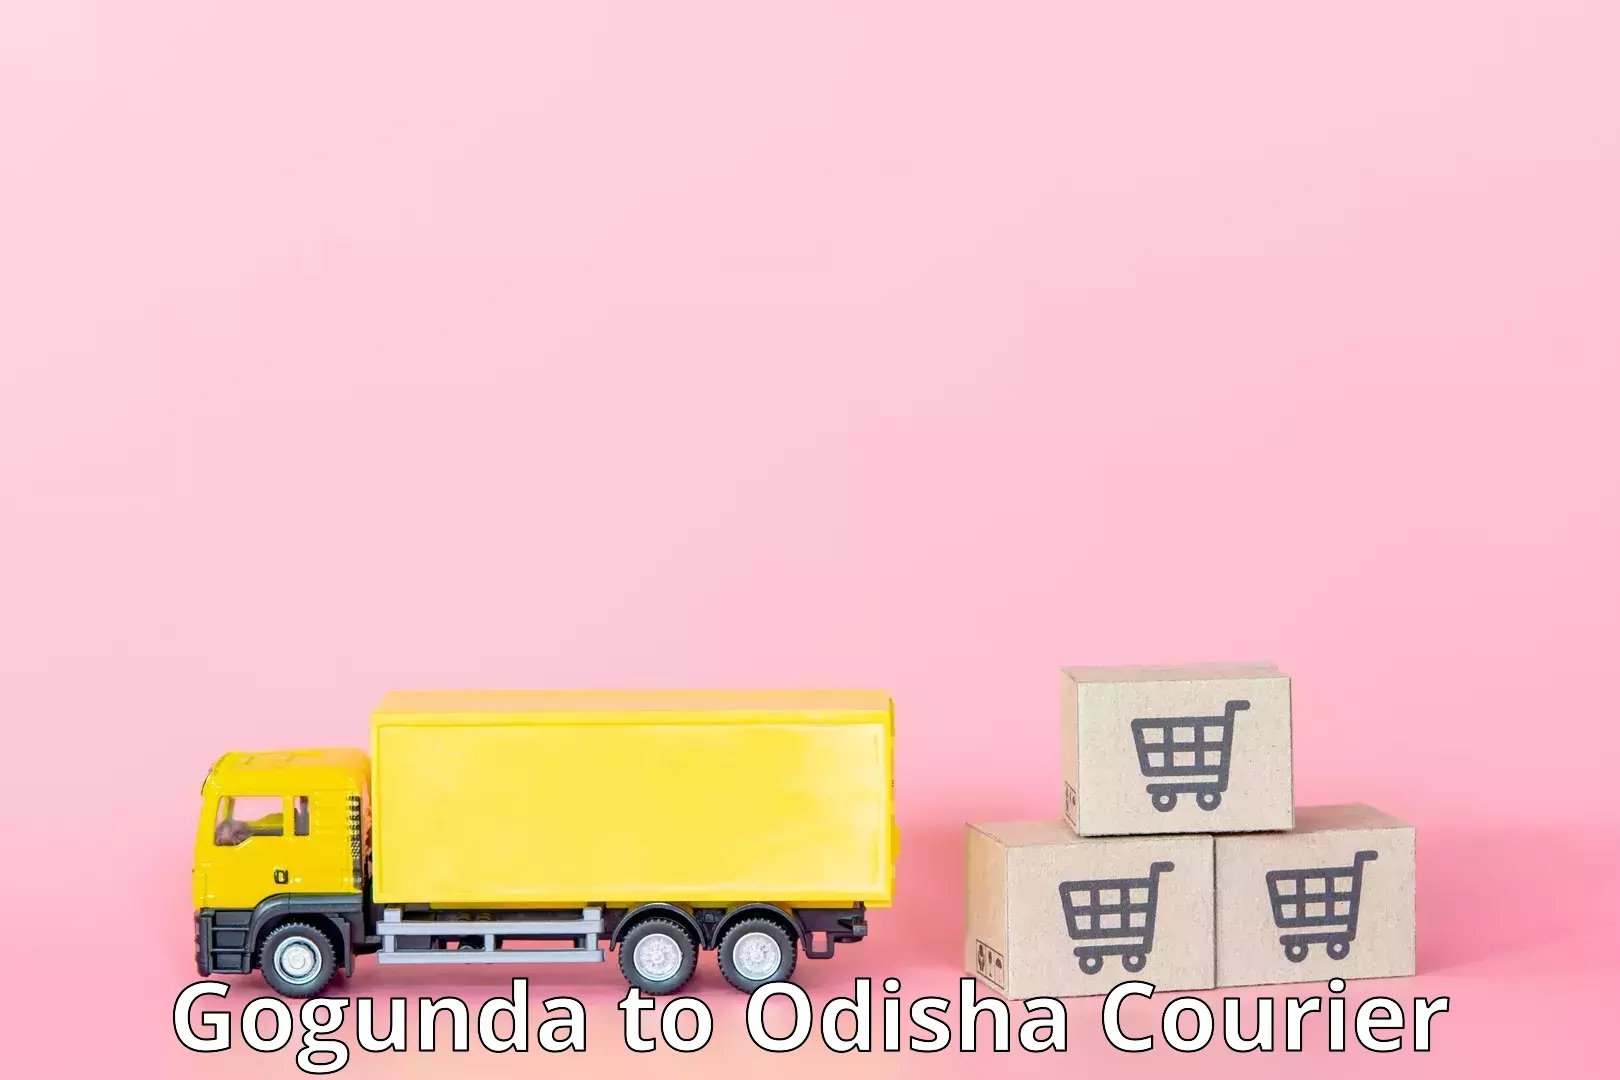 Round-the-clock parcel delivery Gogunda to Tikiri